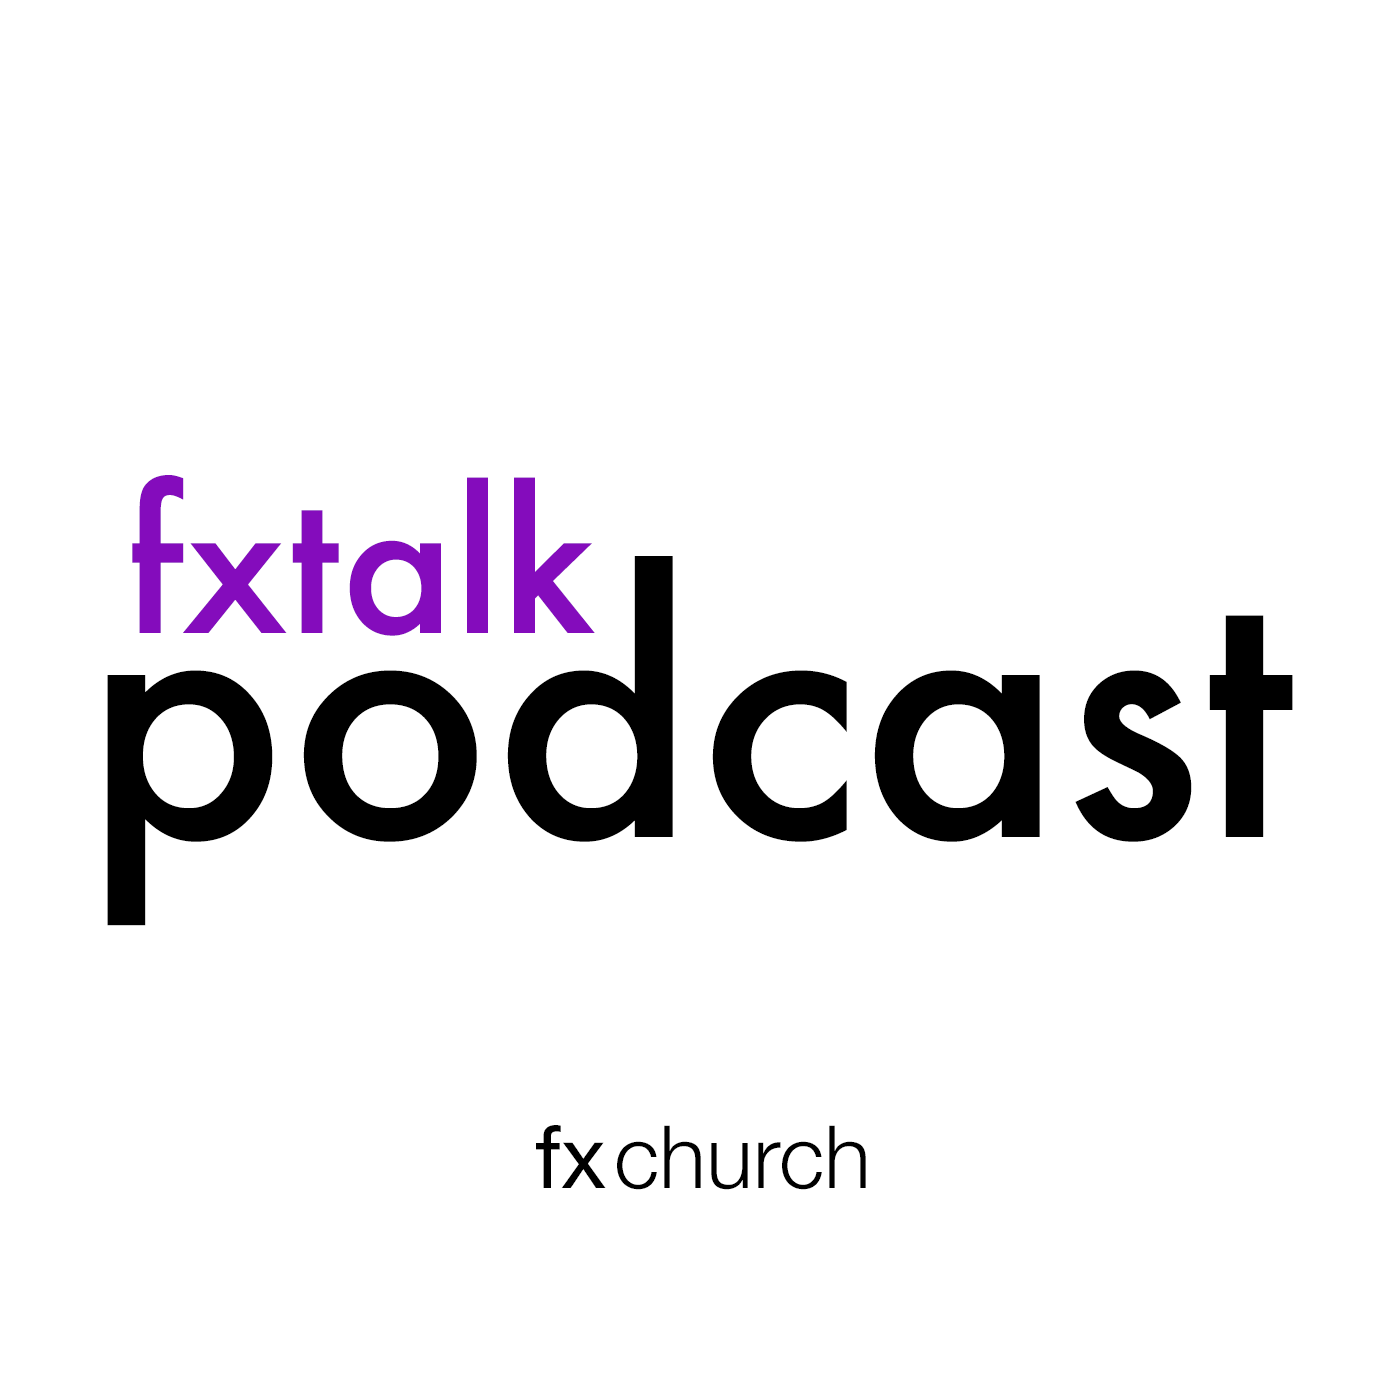 fxtalk podcast